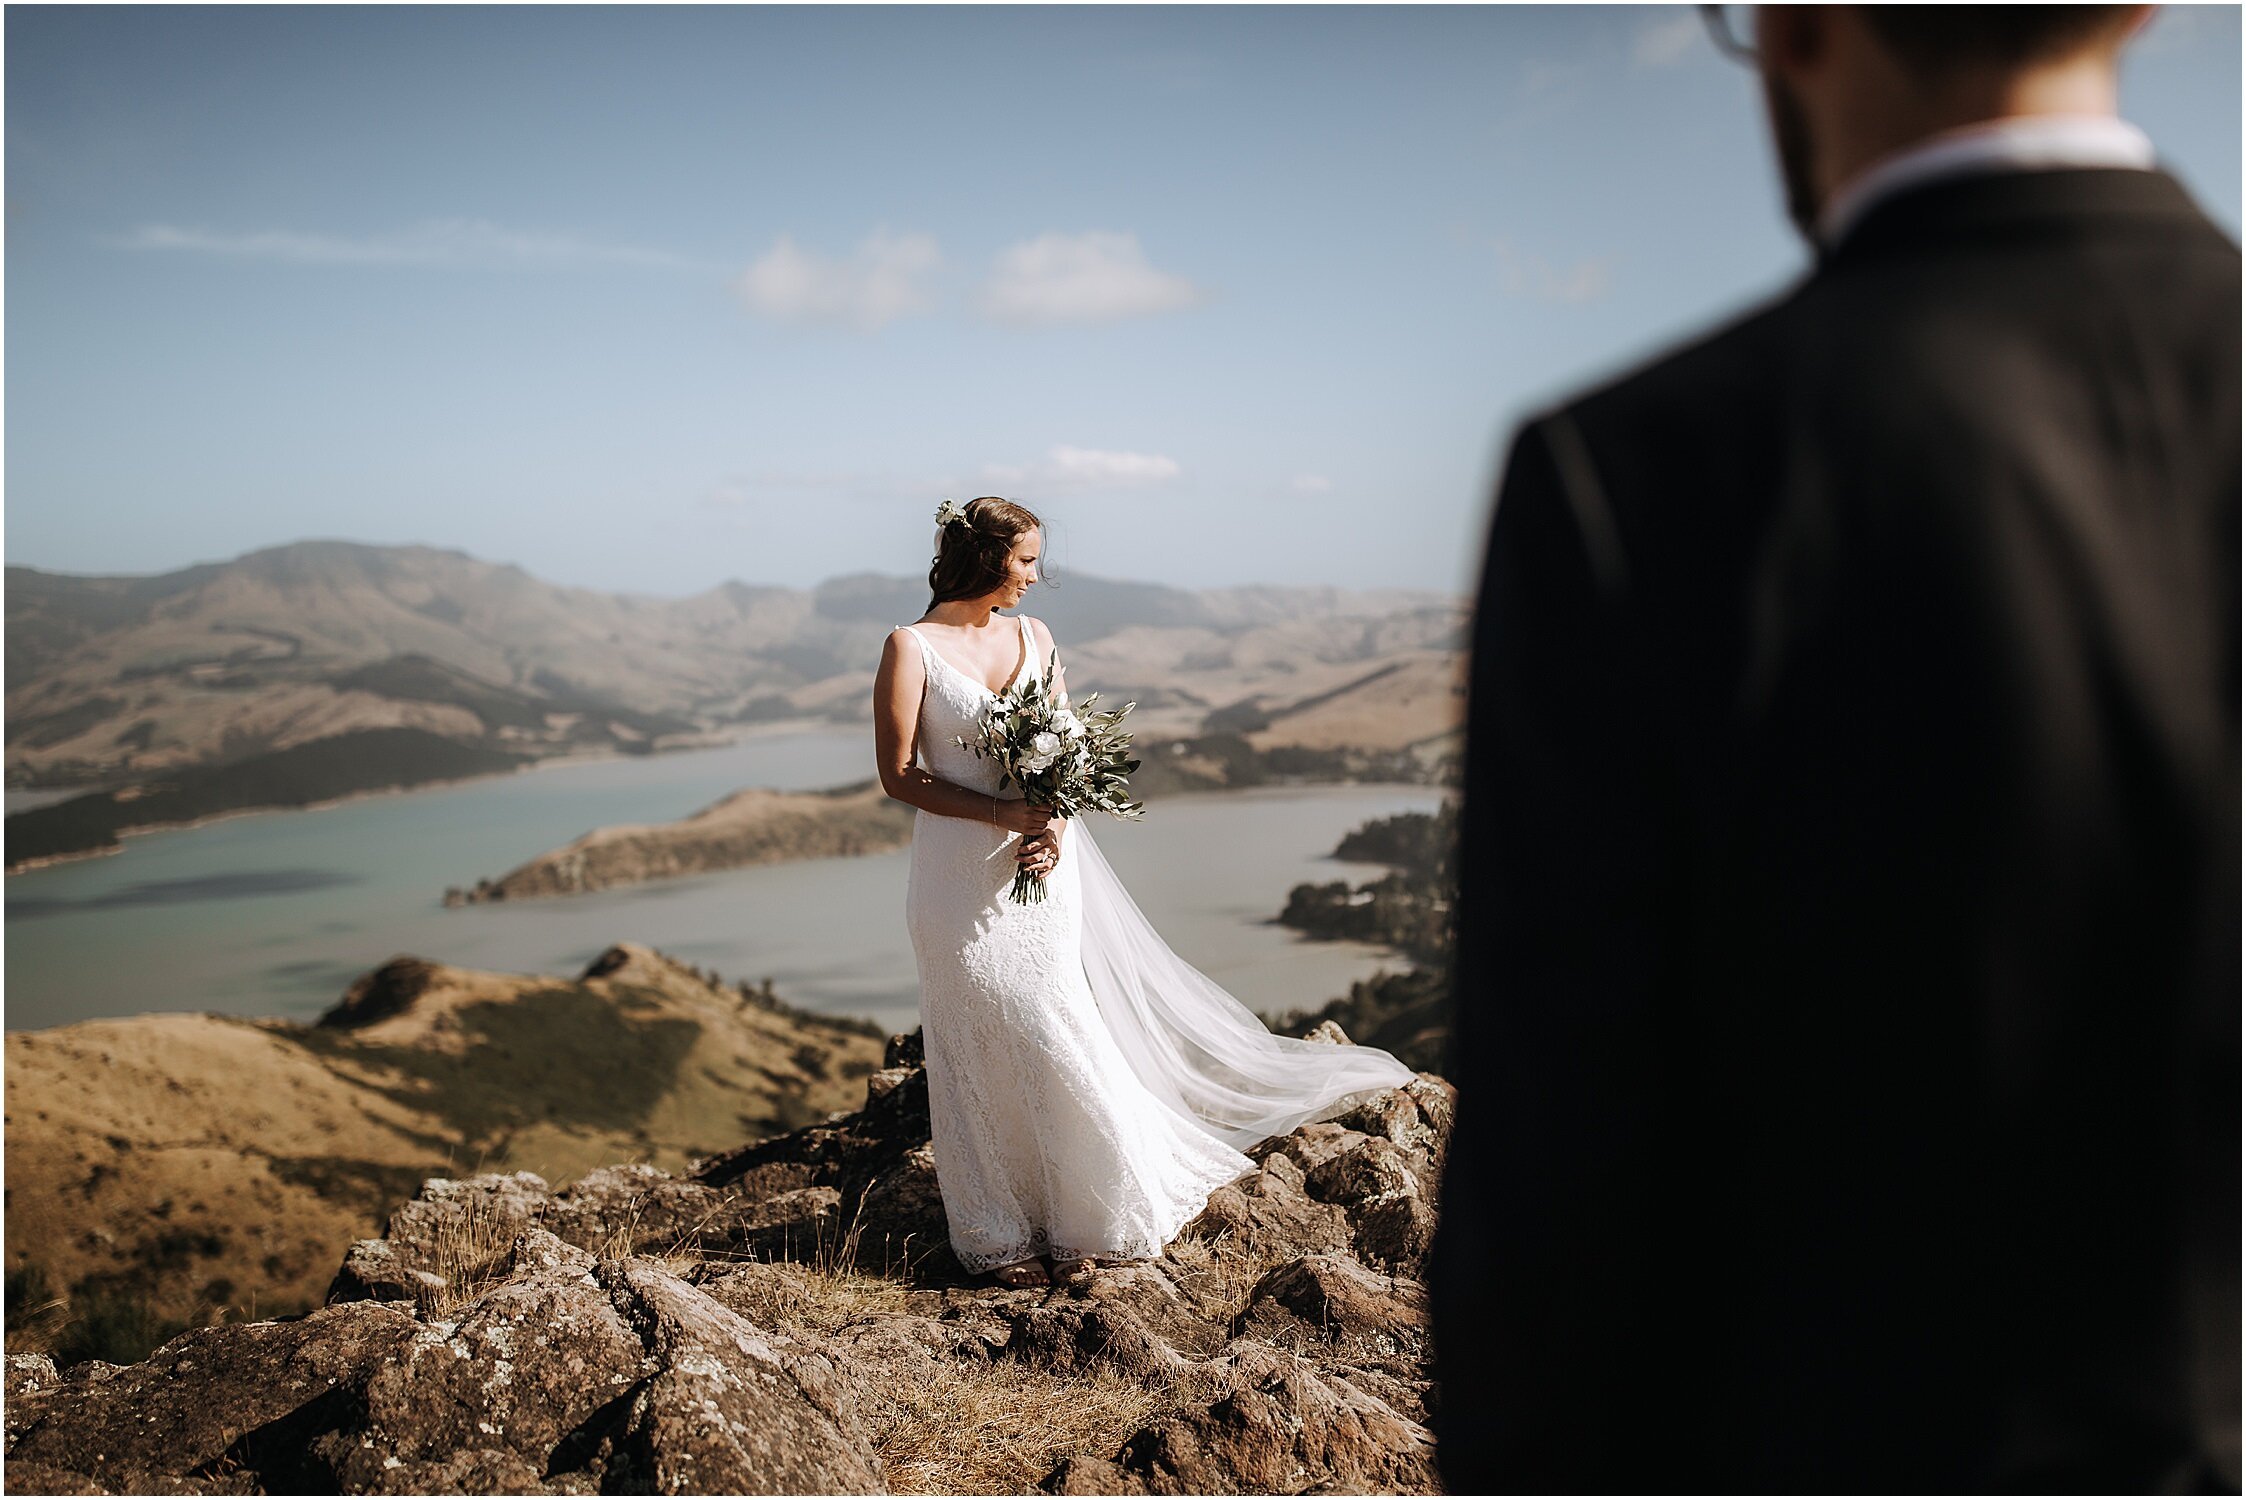 Zanda+Auckland+wedding+photographer+retro+car+Port+Hills+fairytale+garden+venue+Christchurch+South+Island+New+Zealand_49.jpeg